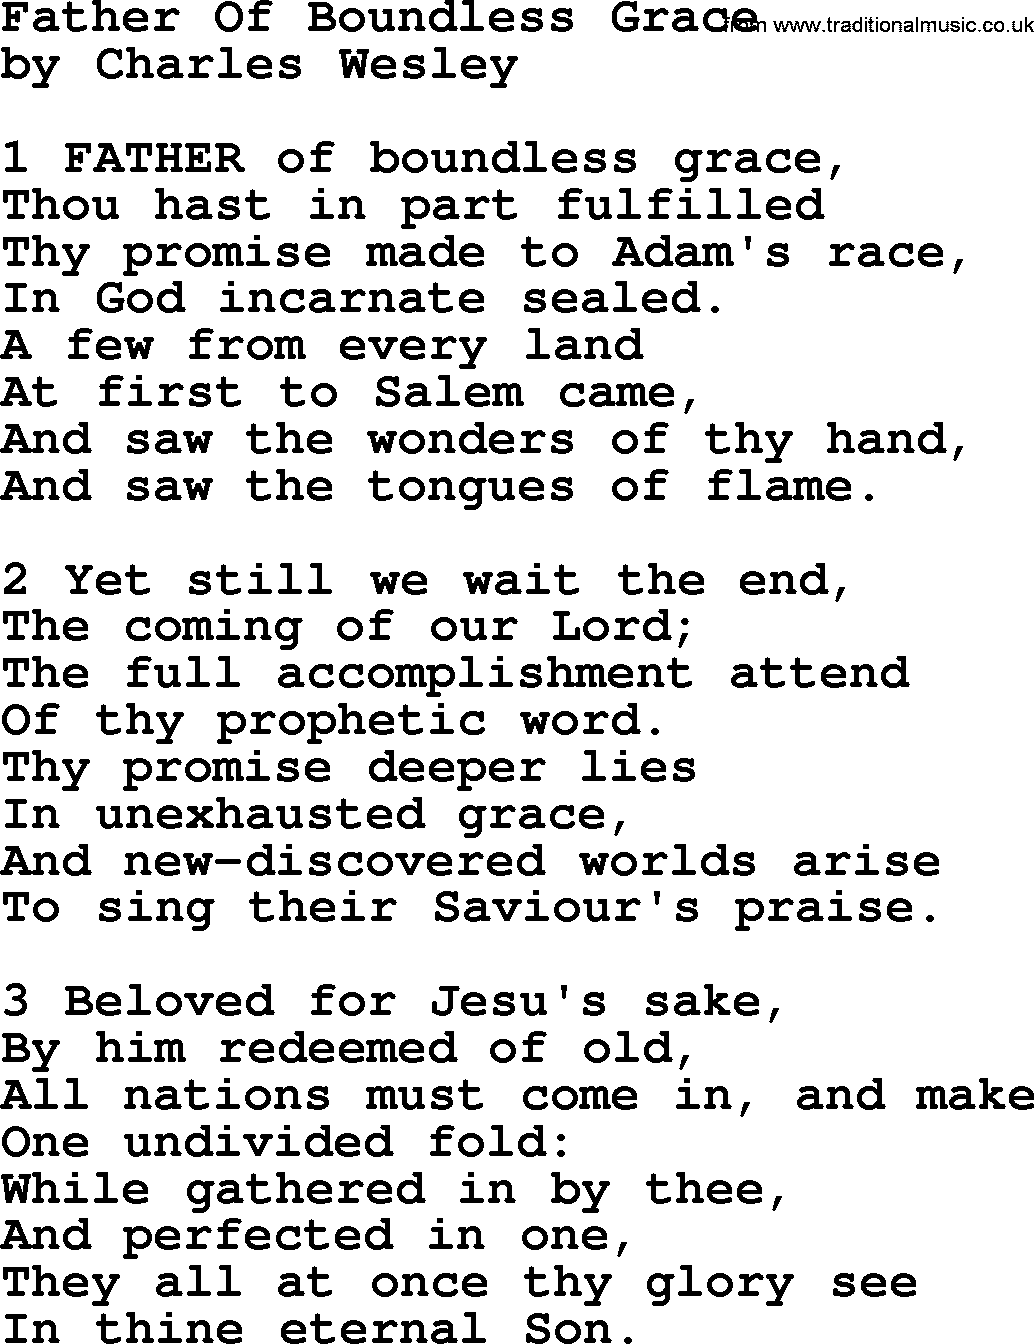 Charles Wesley hymn: Father Of Boundless Grace, lyrics